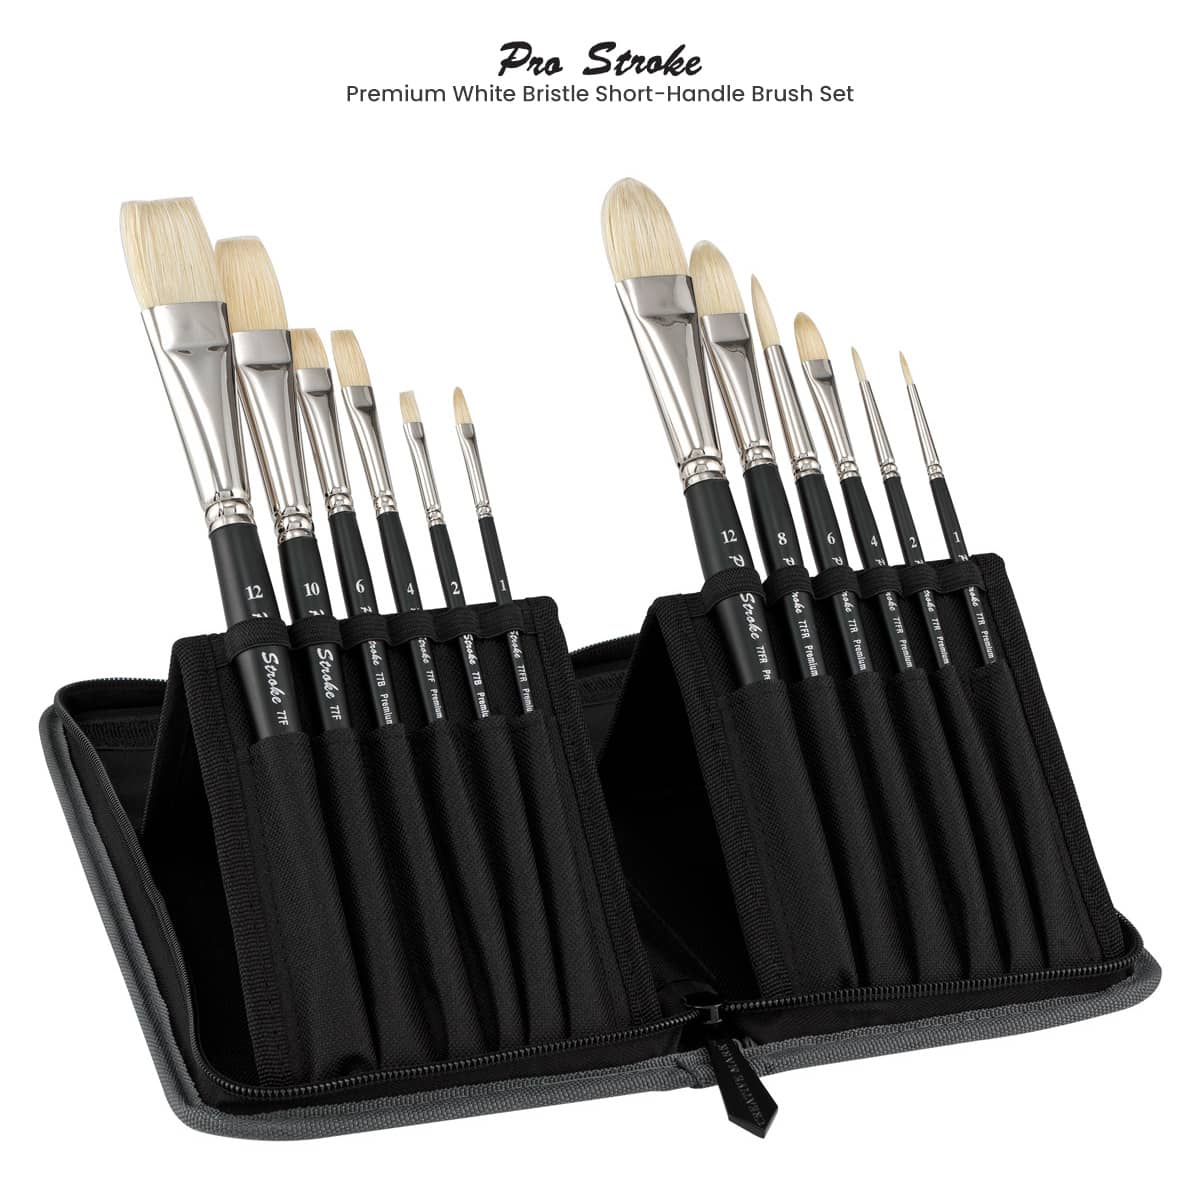 Pro Stroke Premium White Bristle Short-Handle Brush Set